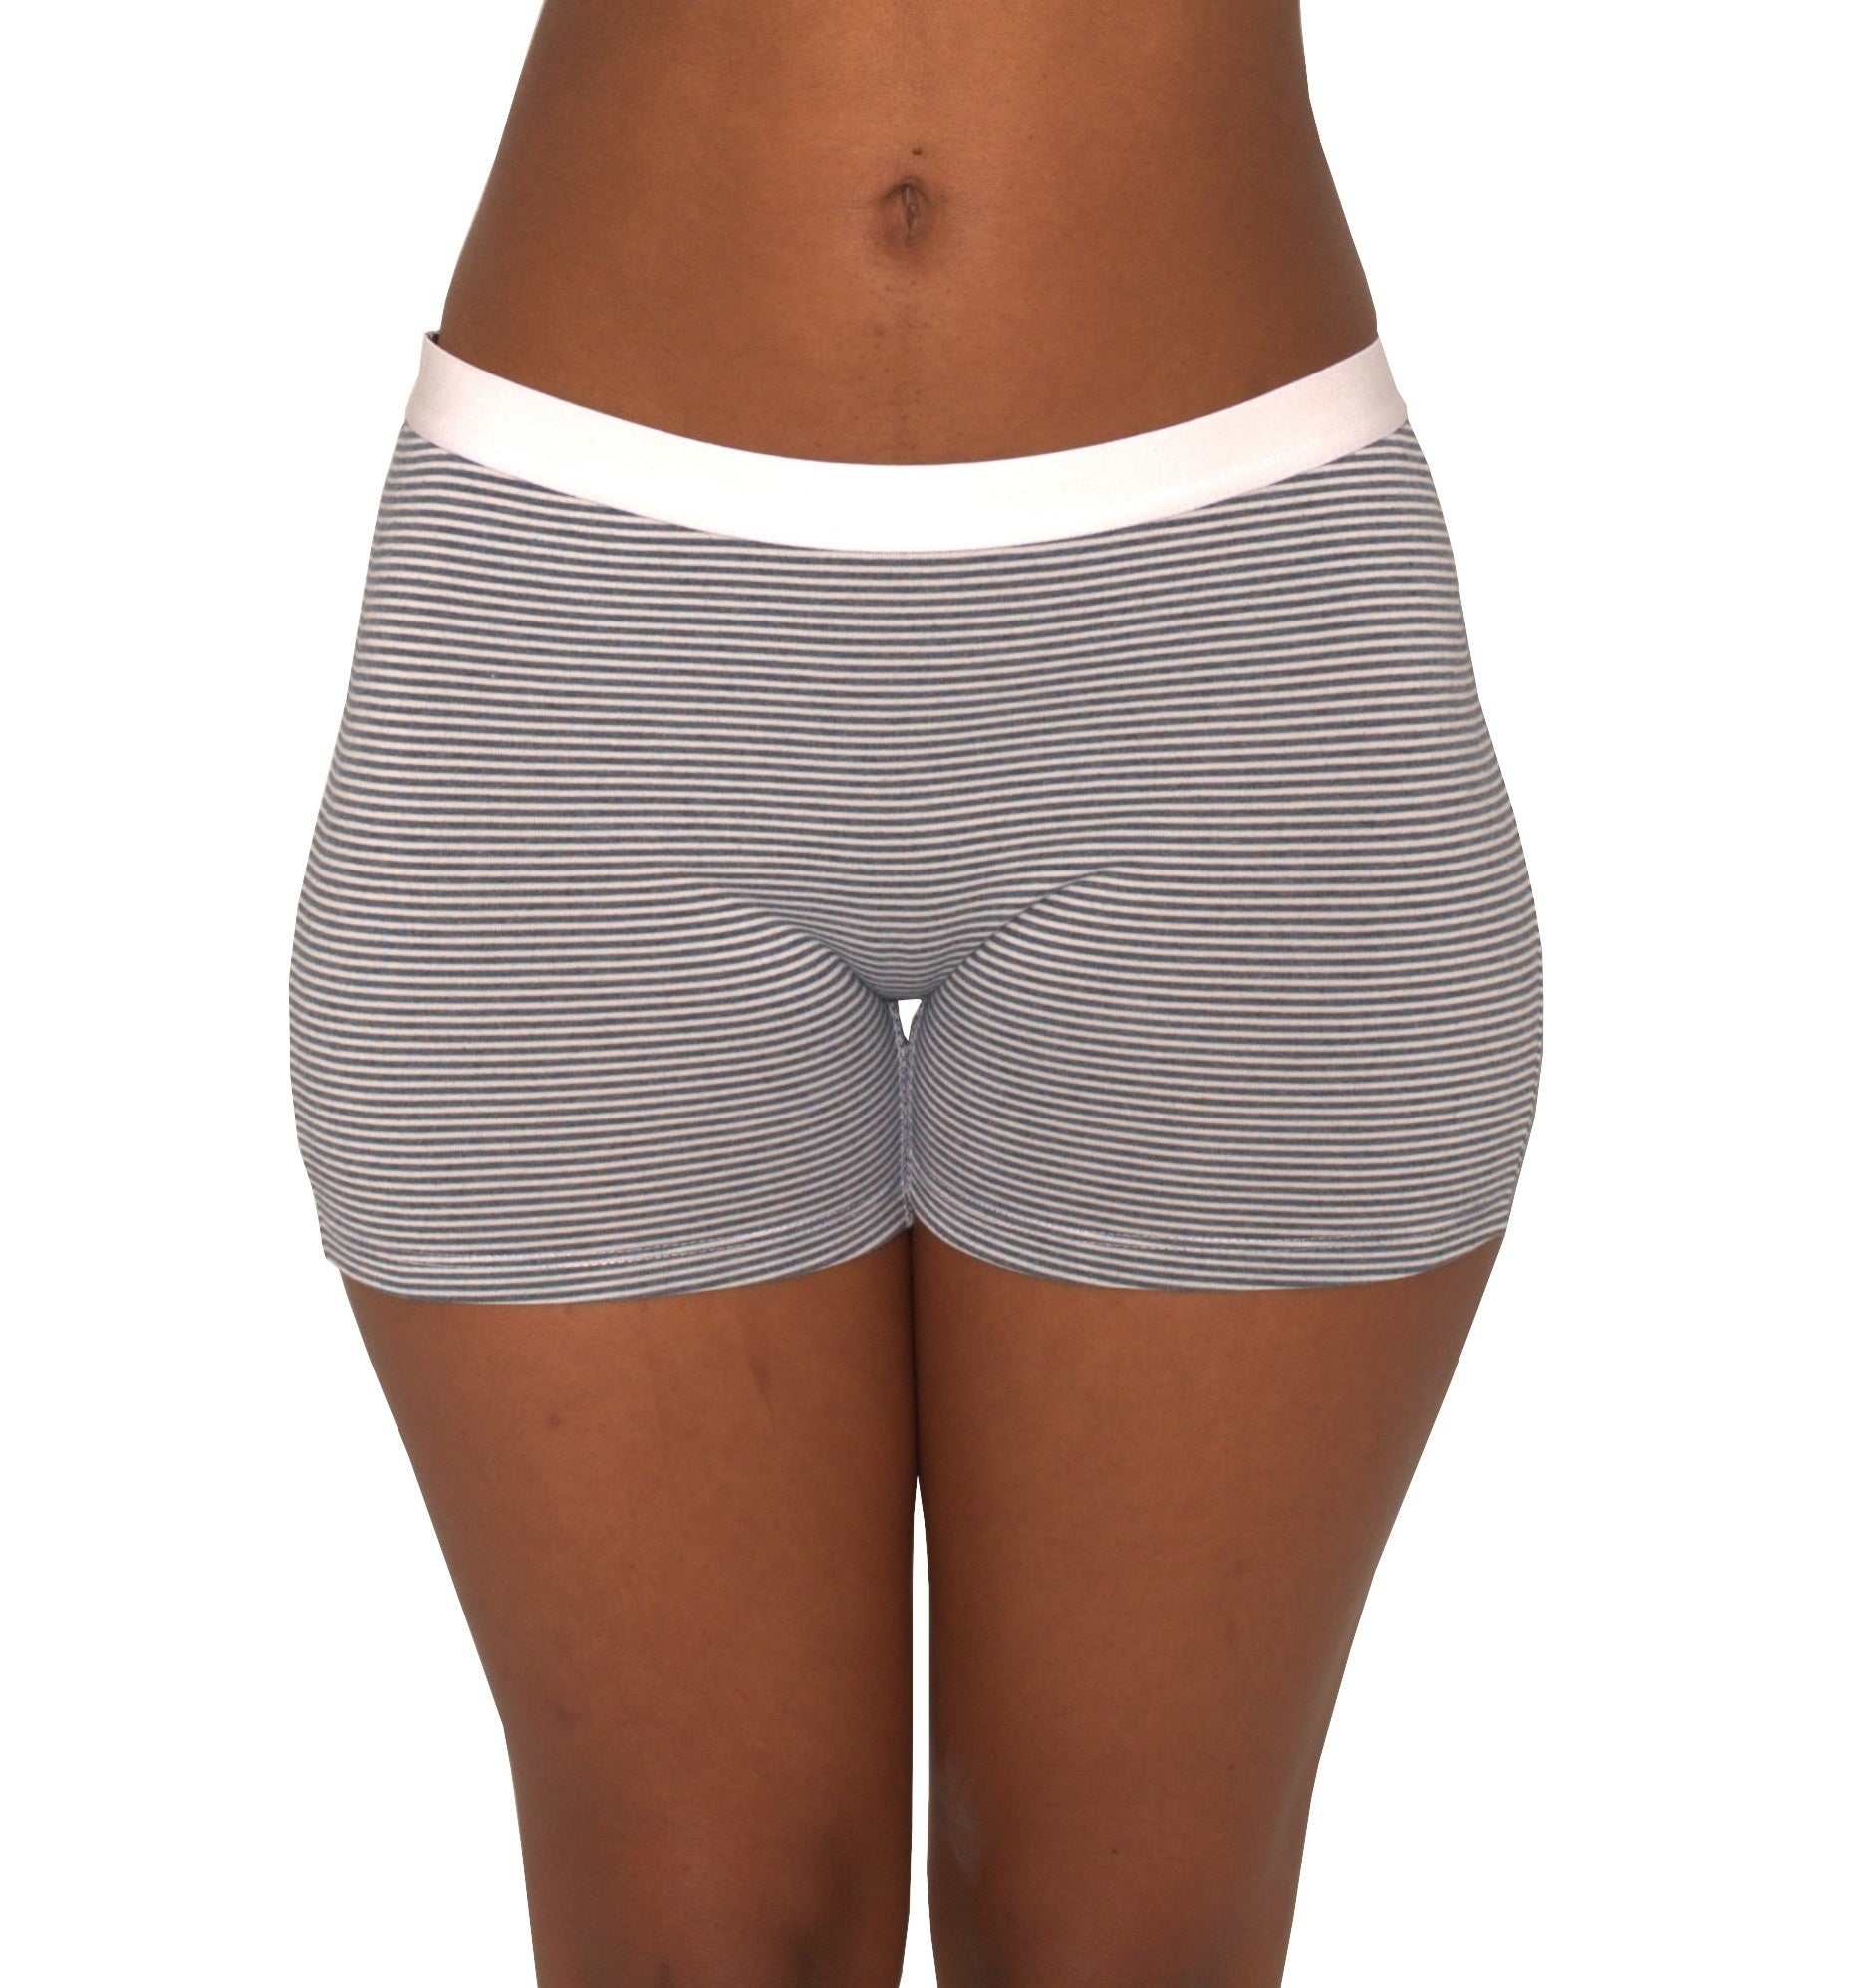 MELERIO Women's Slip Shorts, Comfortable Boyshorts Panties, Anti